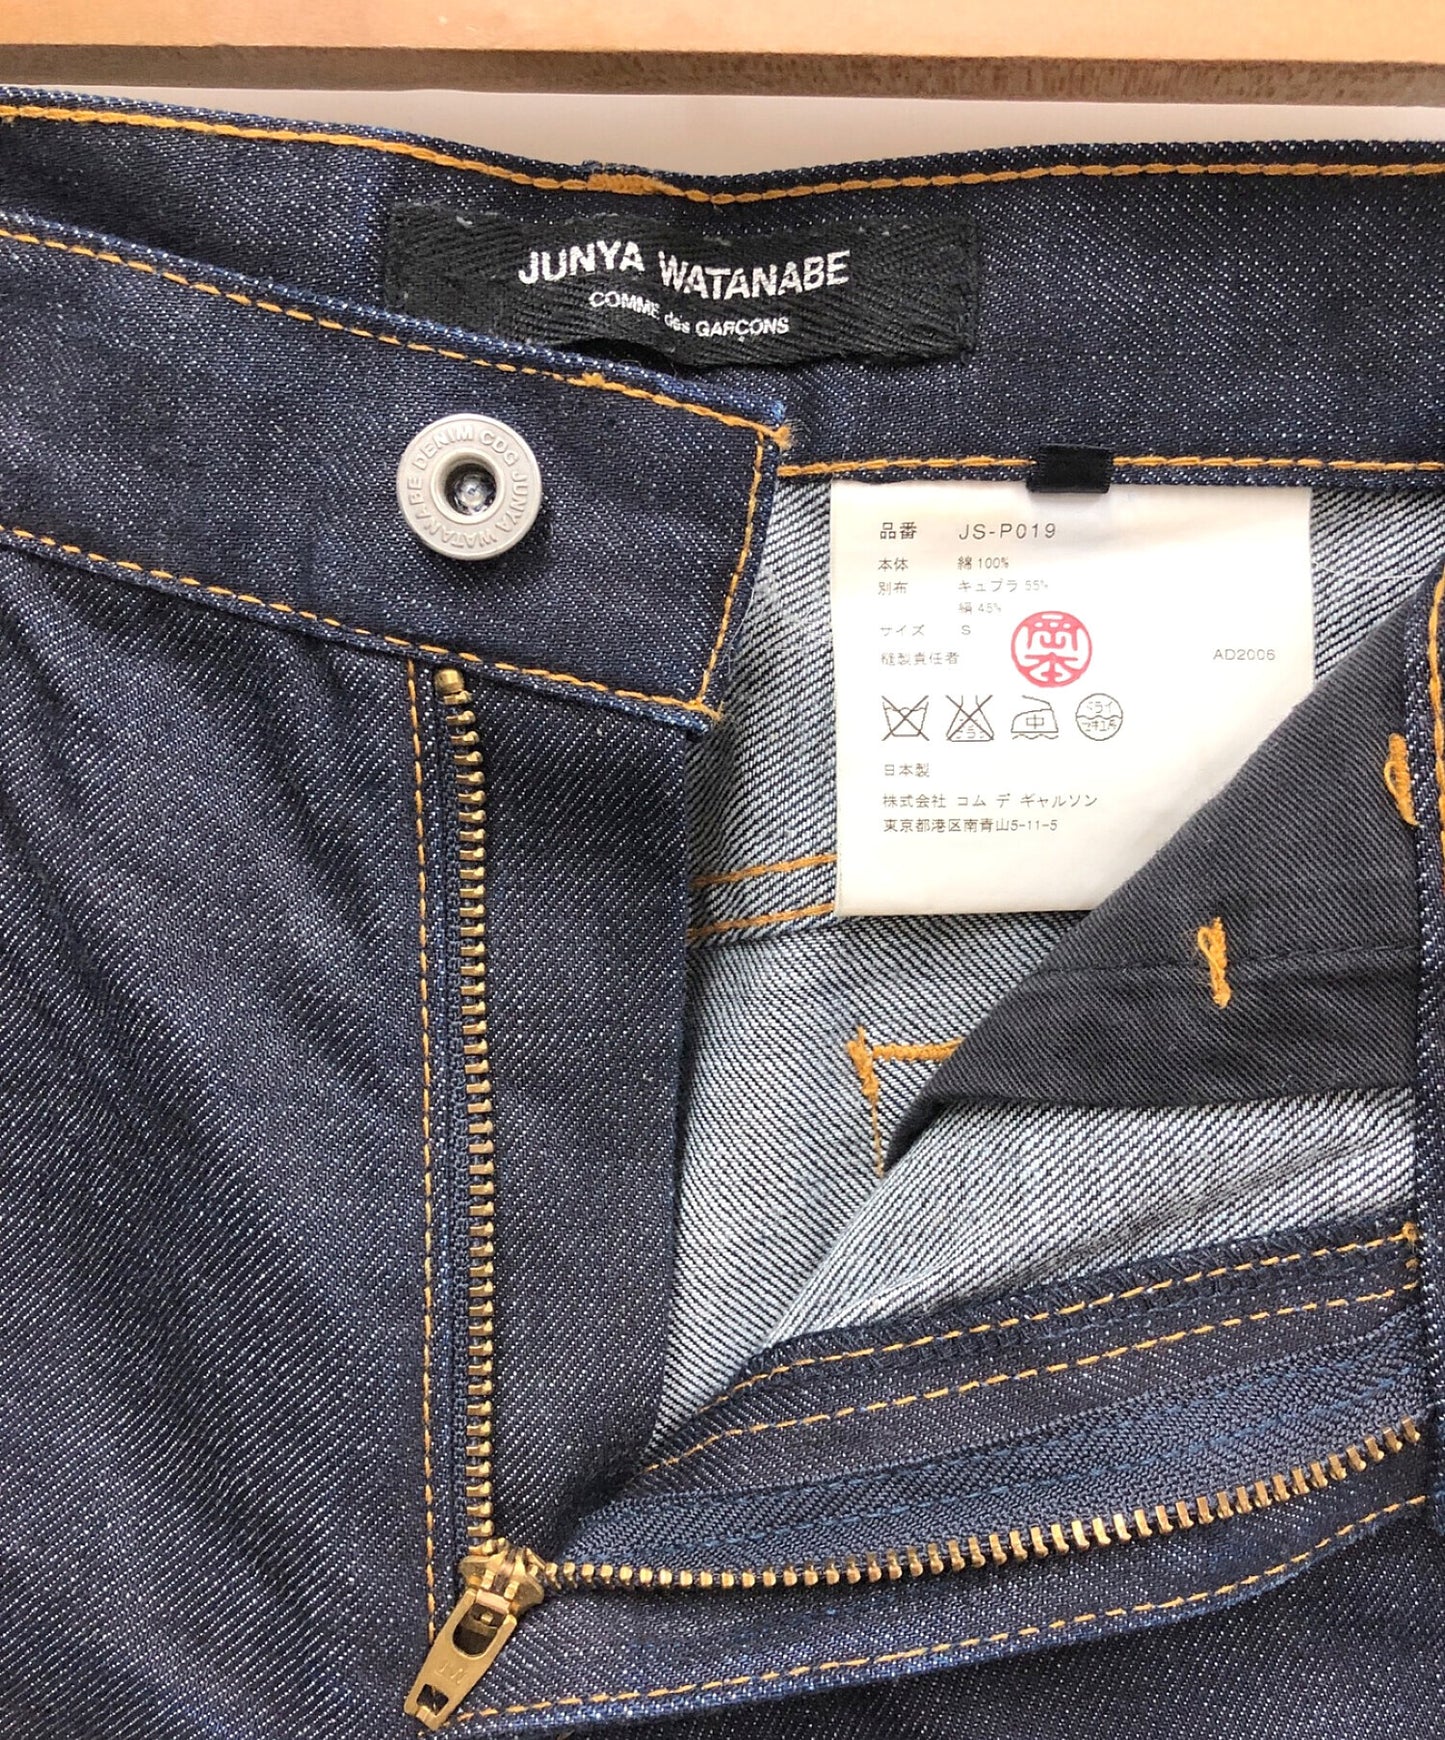 Junya Watanabe Comme des Garcons牛仔褲JS-P019